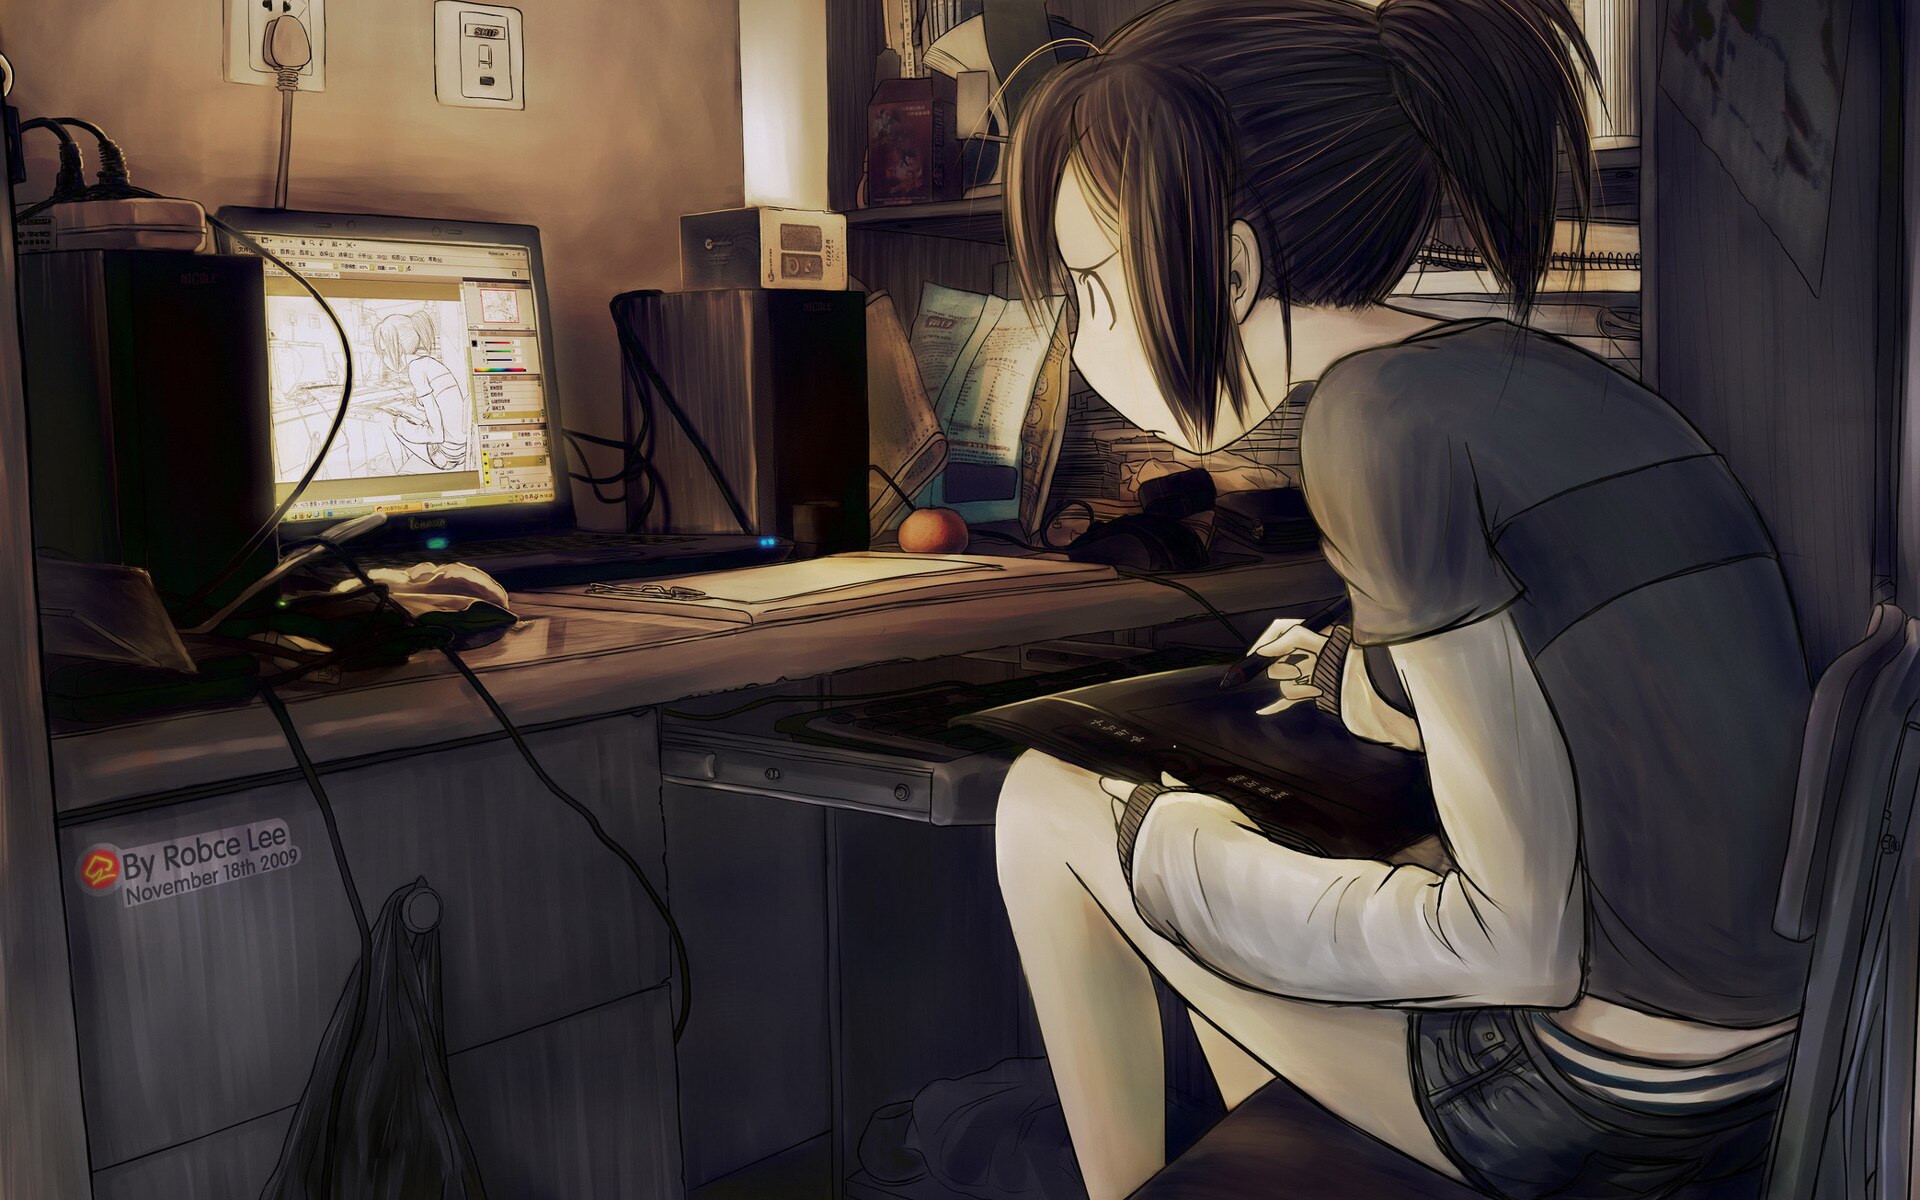 Steam Workshop::Cyberpunk 2077 Girl 32:9 Animated Wallpaper